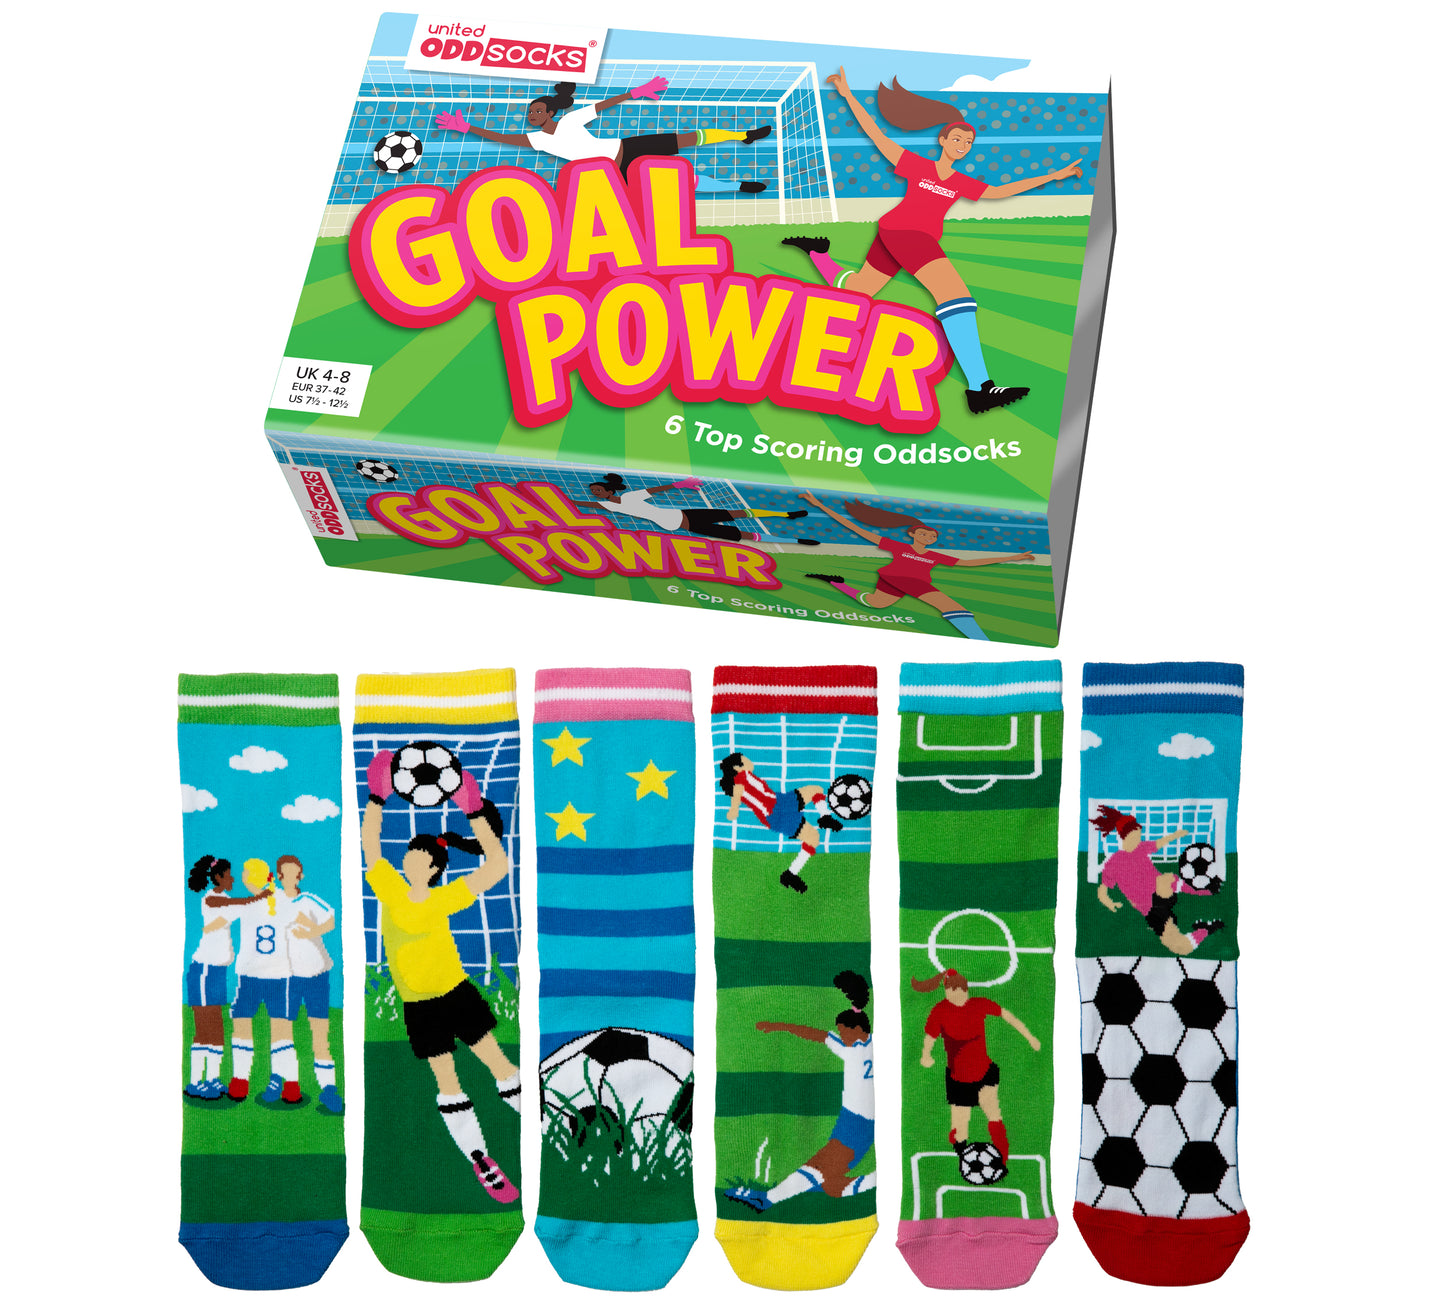 United Oddsocks - Ladies GOAL POWER Odd Socks